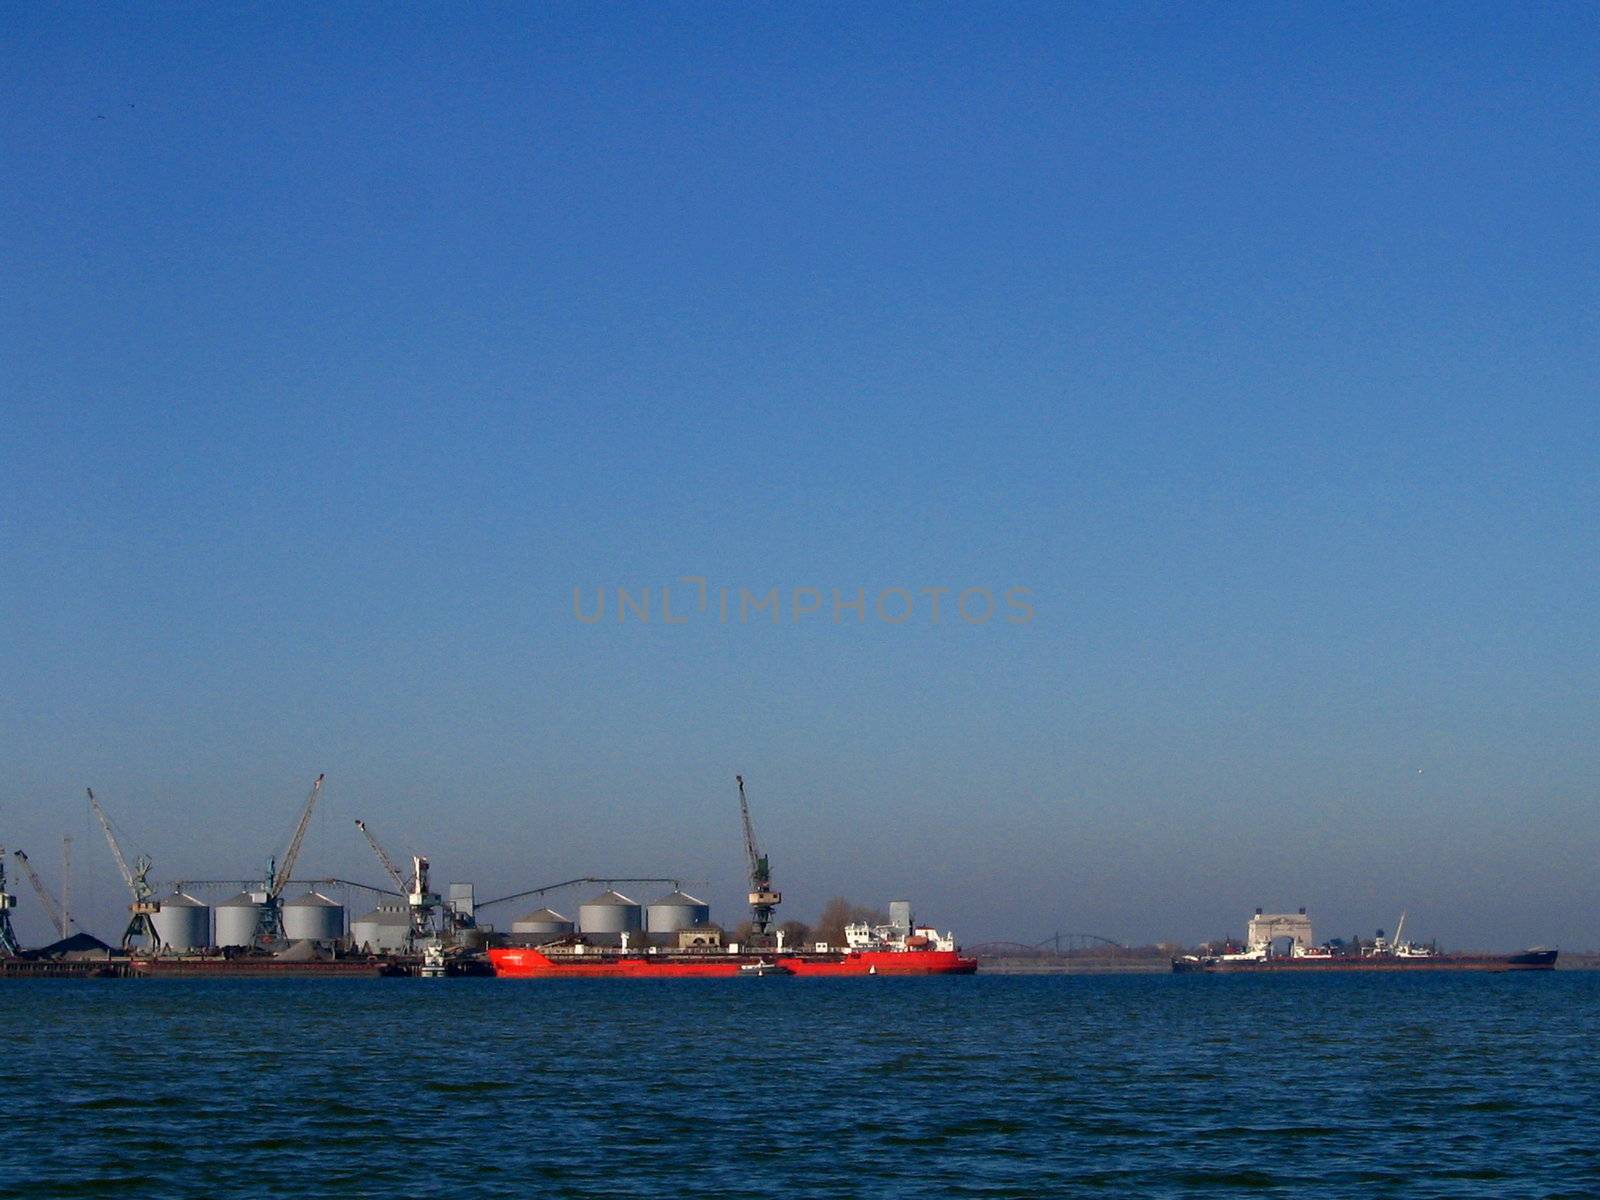 Red oil tanker on seaport